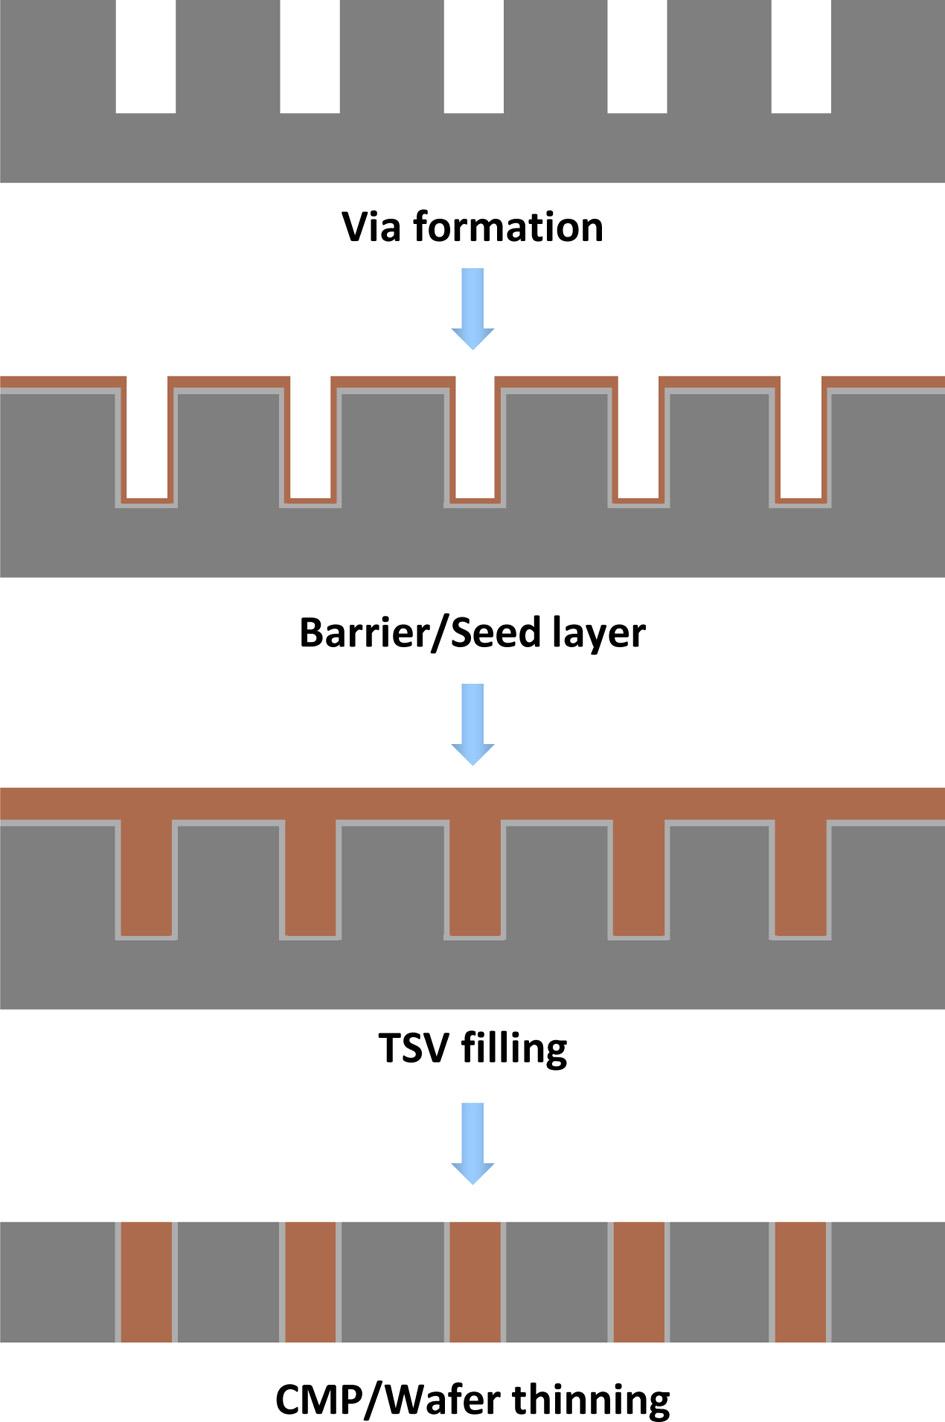 TSV는실리콘웨이퍼 (wafer) 를관통하여형성된깊이약 50 μm 이상의비아 (via) 로, Fig. 1에나타나있듯이직접회로 (integrated circuit) 와직접회로를전기적, 수직적으로연결한다. TSV를사용하여최단거리의신호전달이가능하므로와이어본딩에비해높은성능의소자패키징 (packaging) 을구현할수있다 [3].